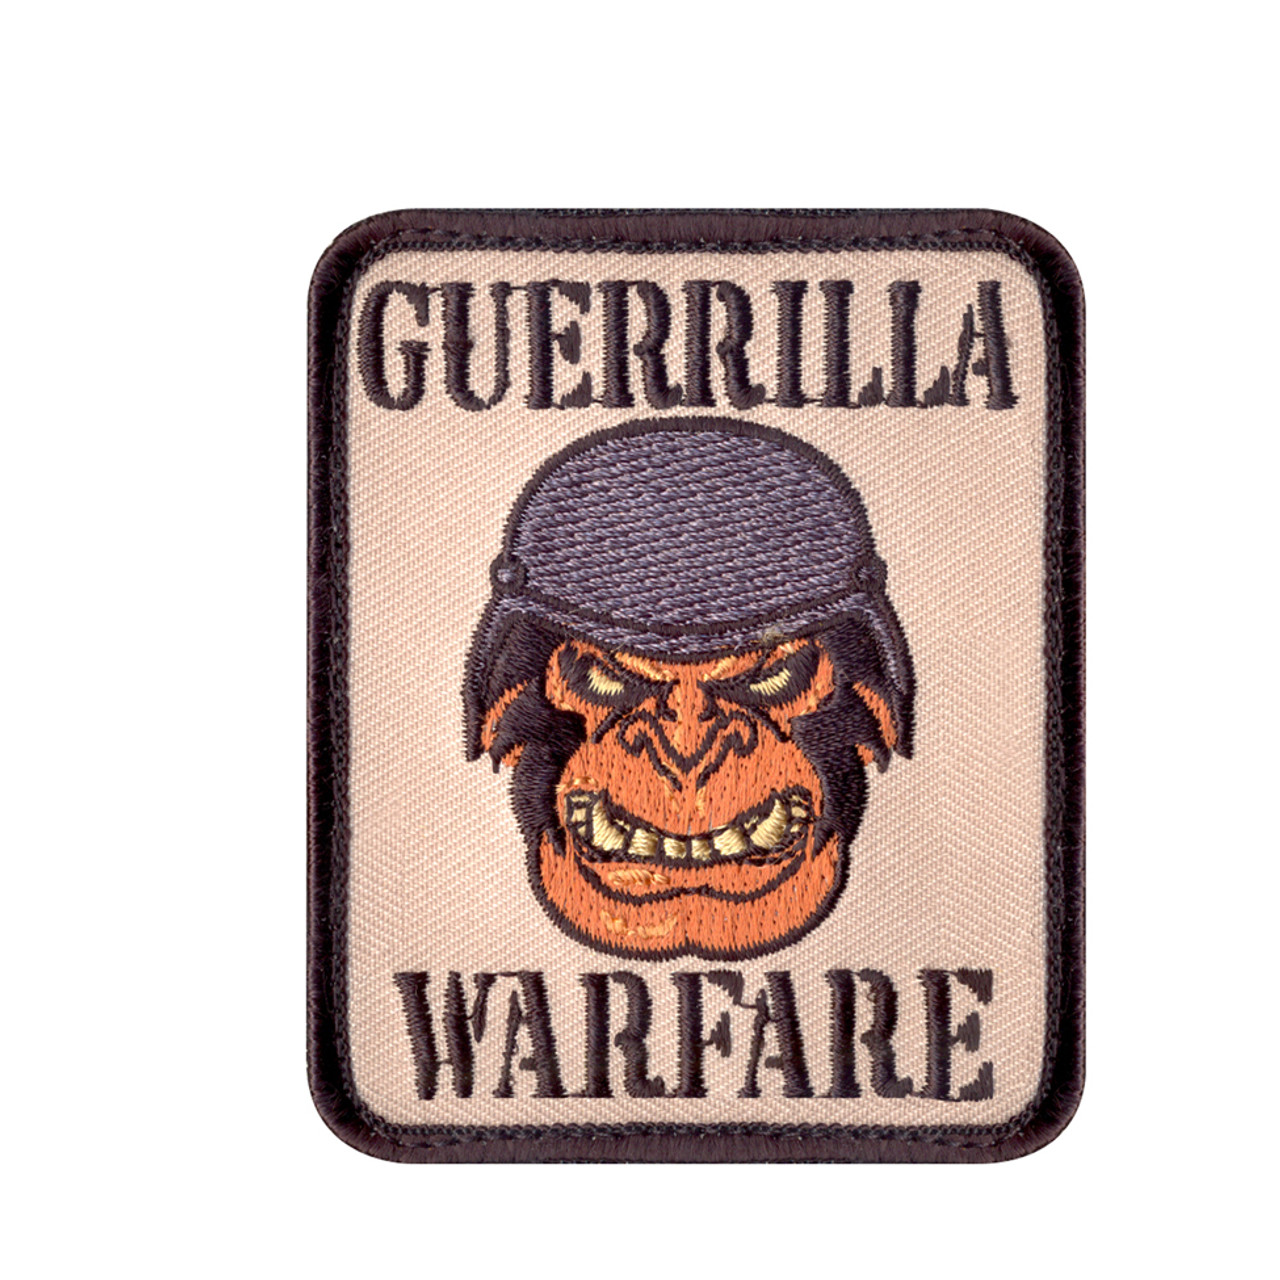 Shop Guerrilla Warfare Morale Patches - Fatigues Army Navy Gear